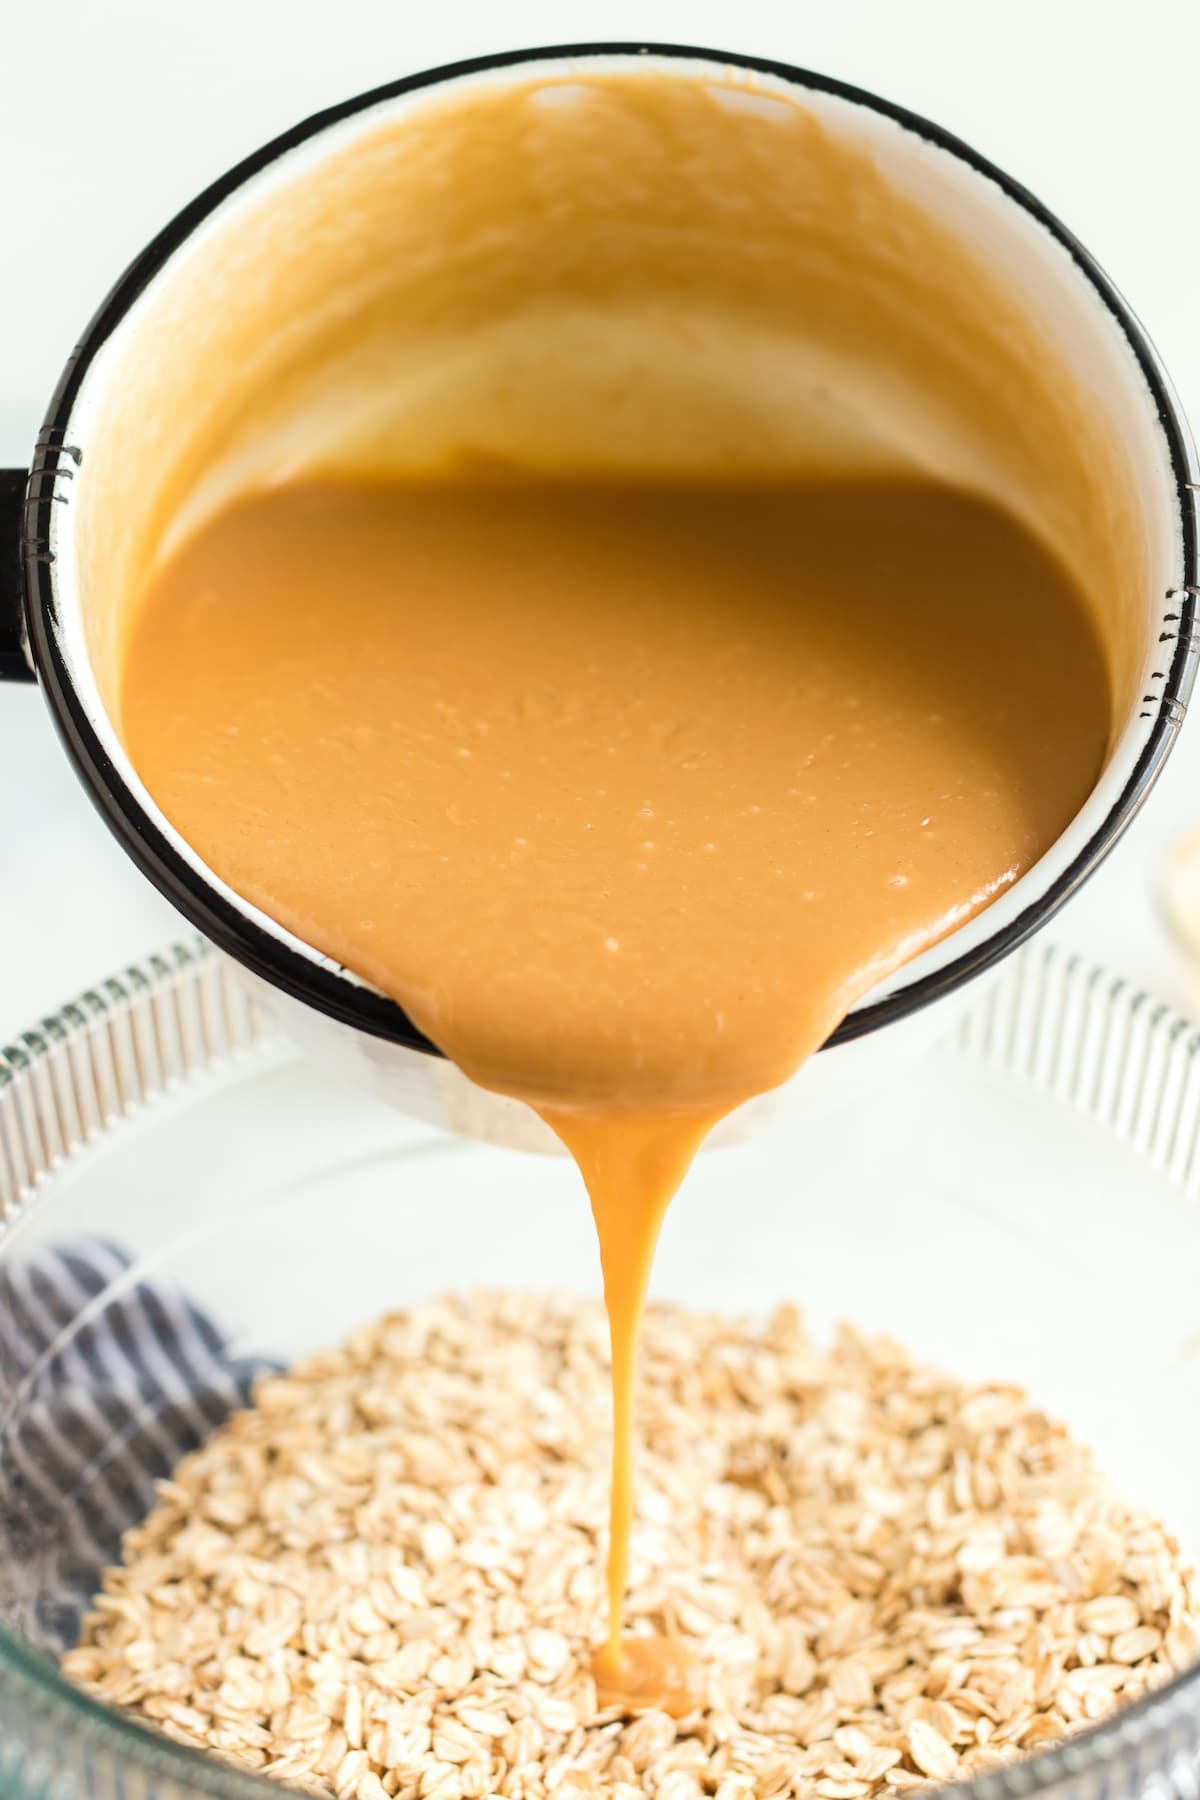 Pour the peanut butter mixture over oats